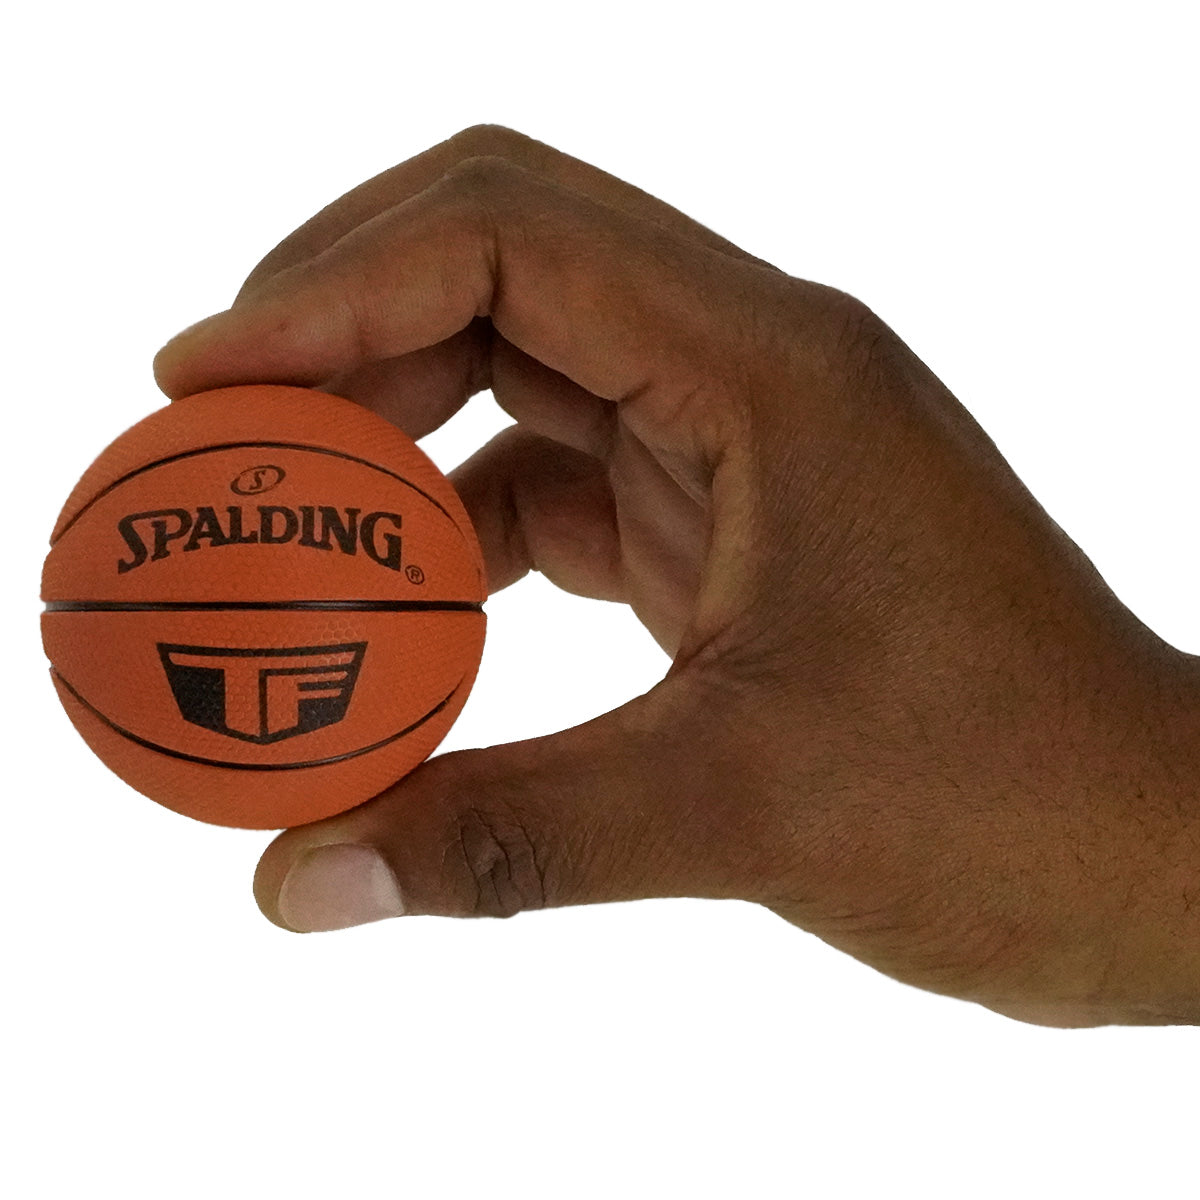 Spalding High Bounce Spaldeen TF Mini Basketball - Orange Spalding